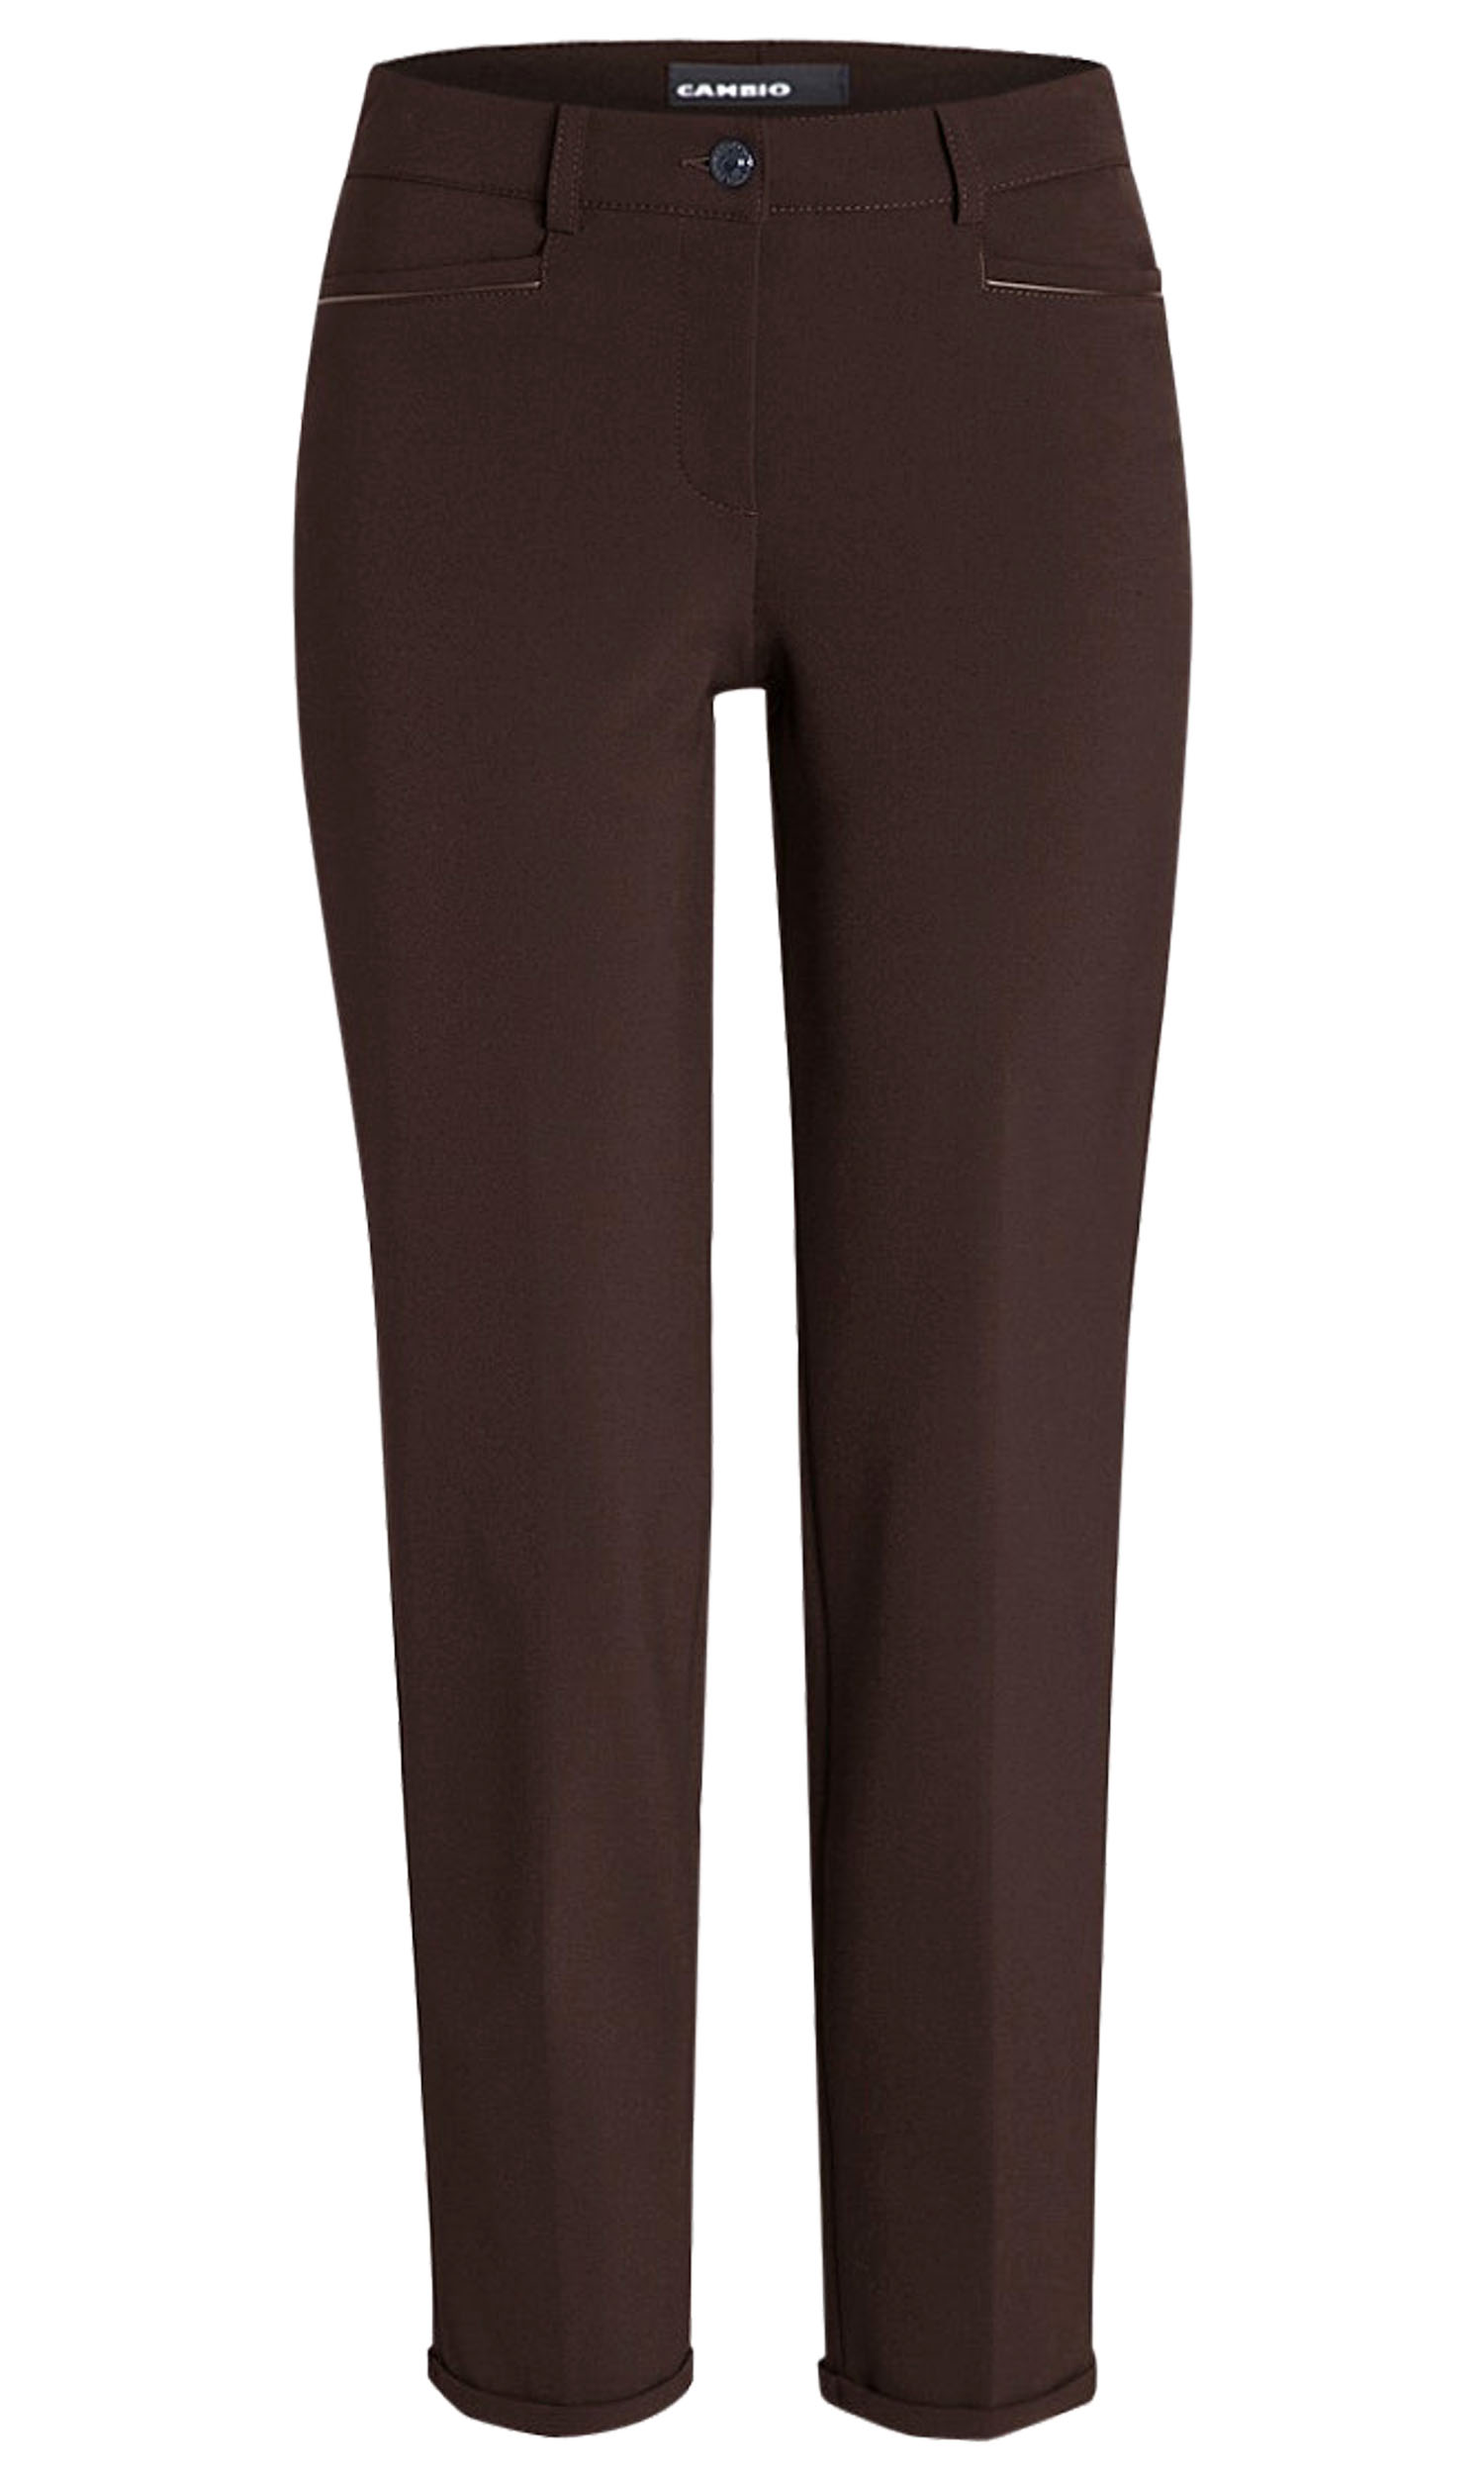 Cambio trousers RENIRA 6111-0285-11 Brown by Penninkhoffashion.com